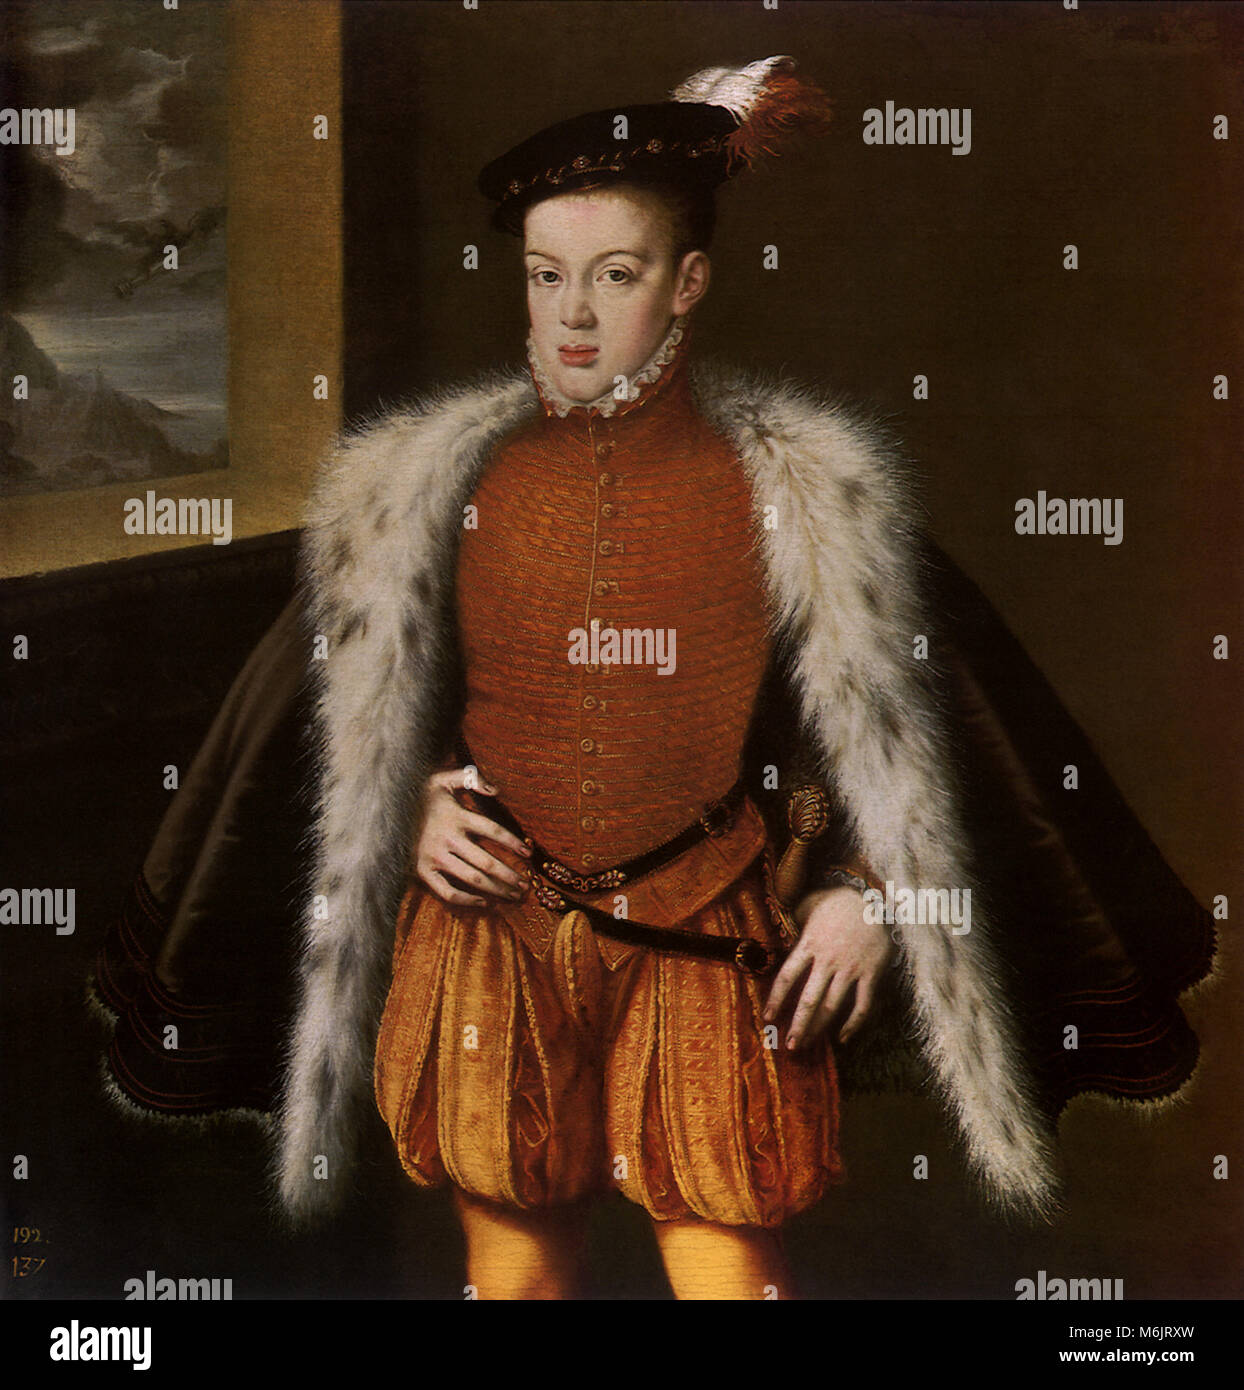 Prince Charles 1580, Coello, Alonso Sanchez, 1580. Stock Photo